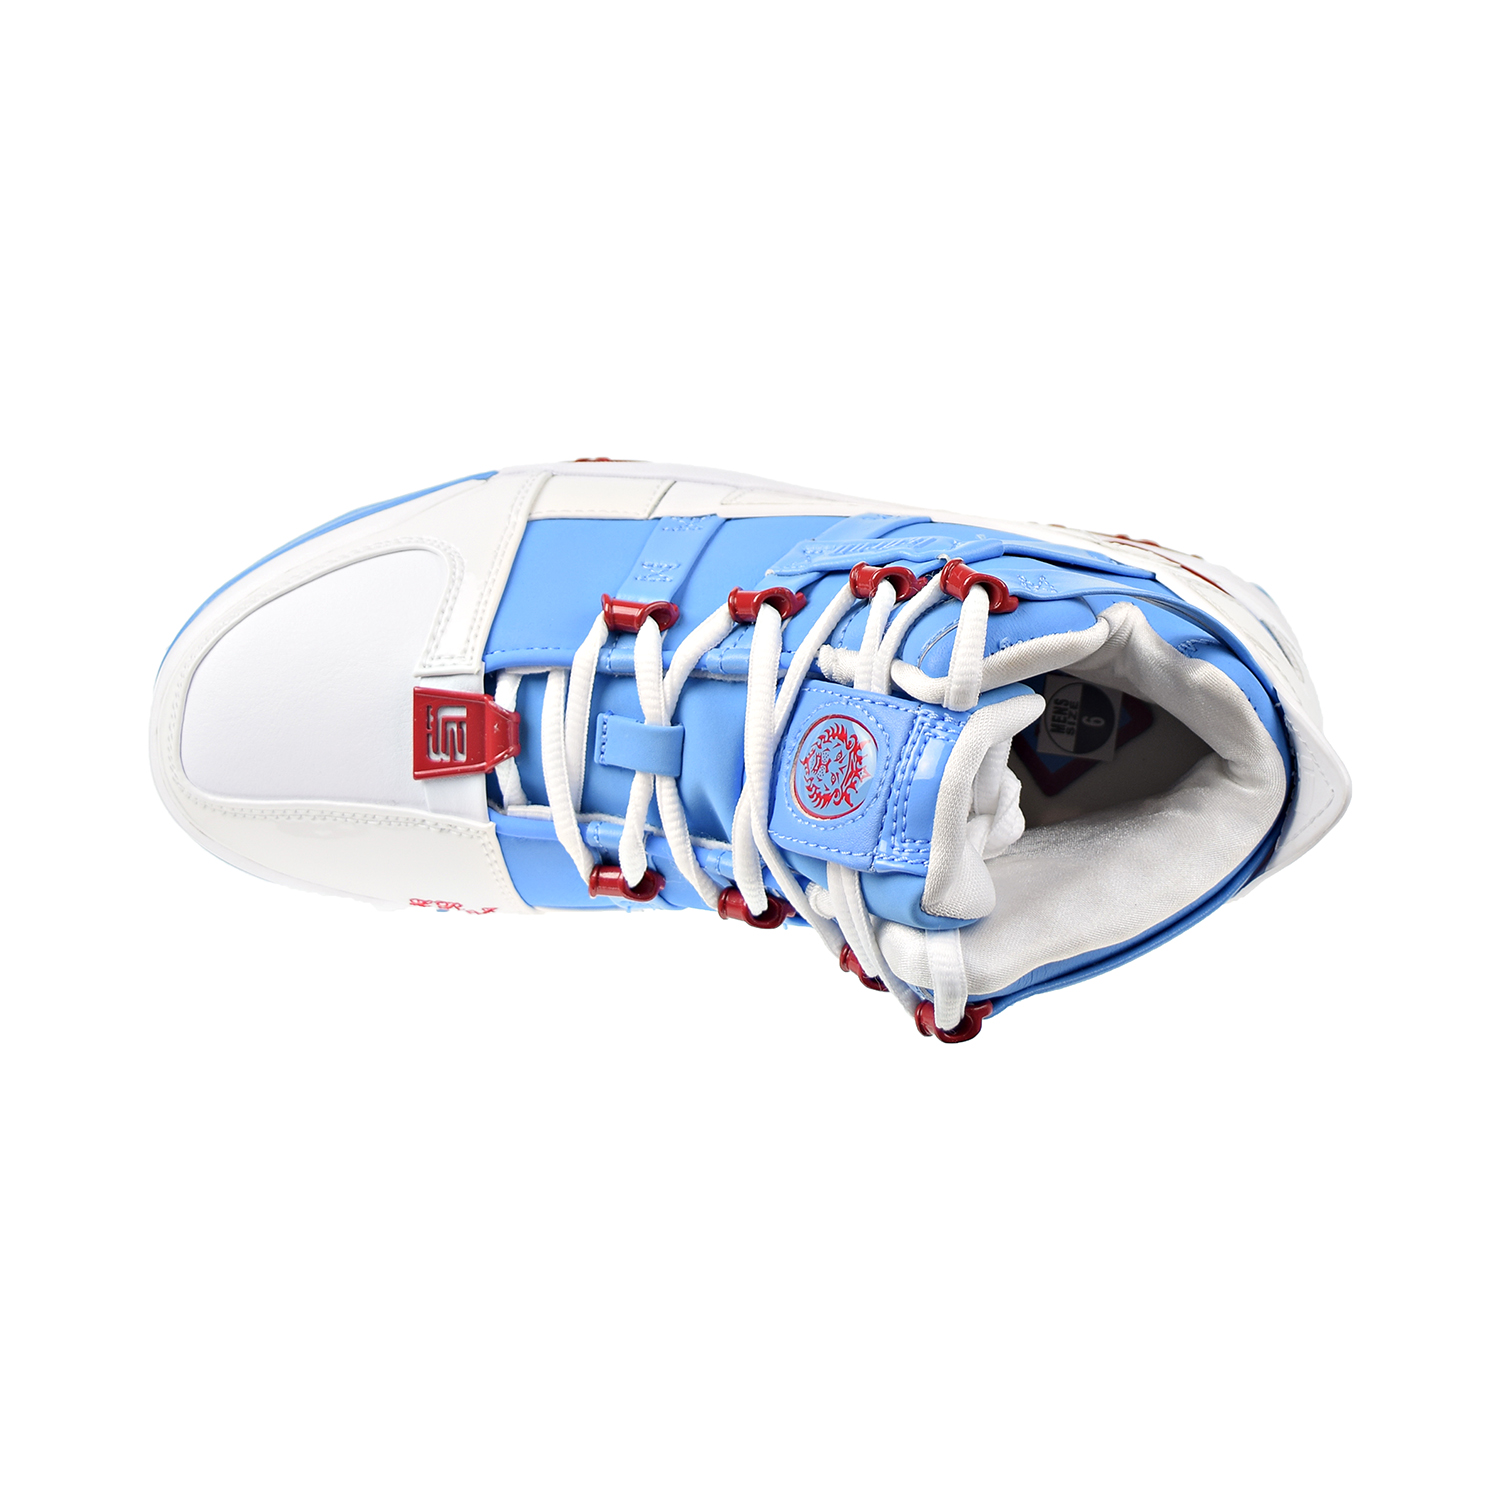 Nike Zoom Lebron III QS "Houston Oilers" Men's Shoes University Blue/Red ao2434-400 - image 5 of 6